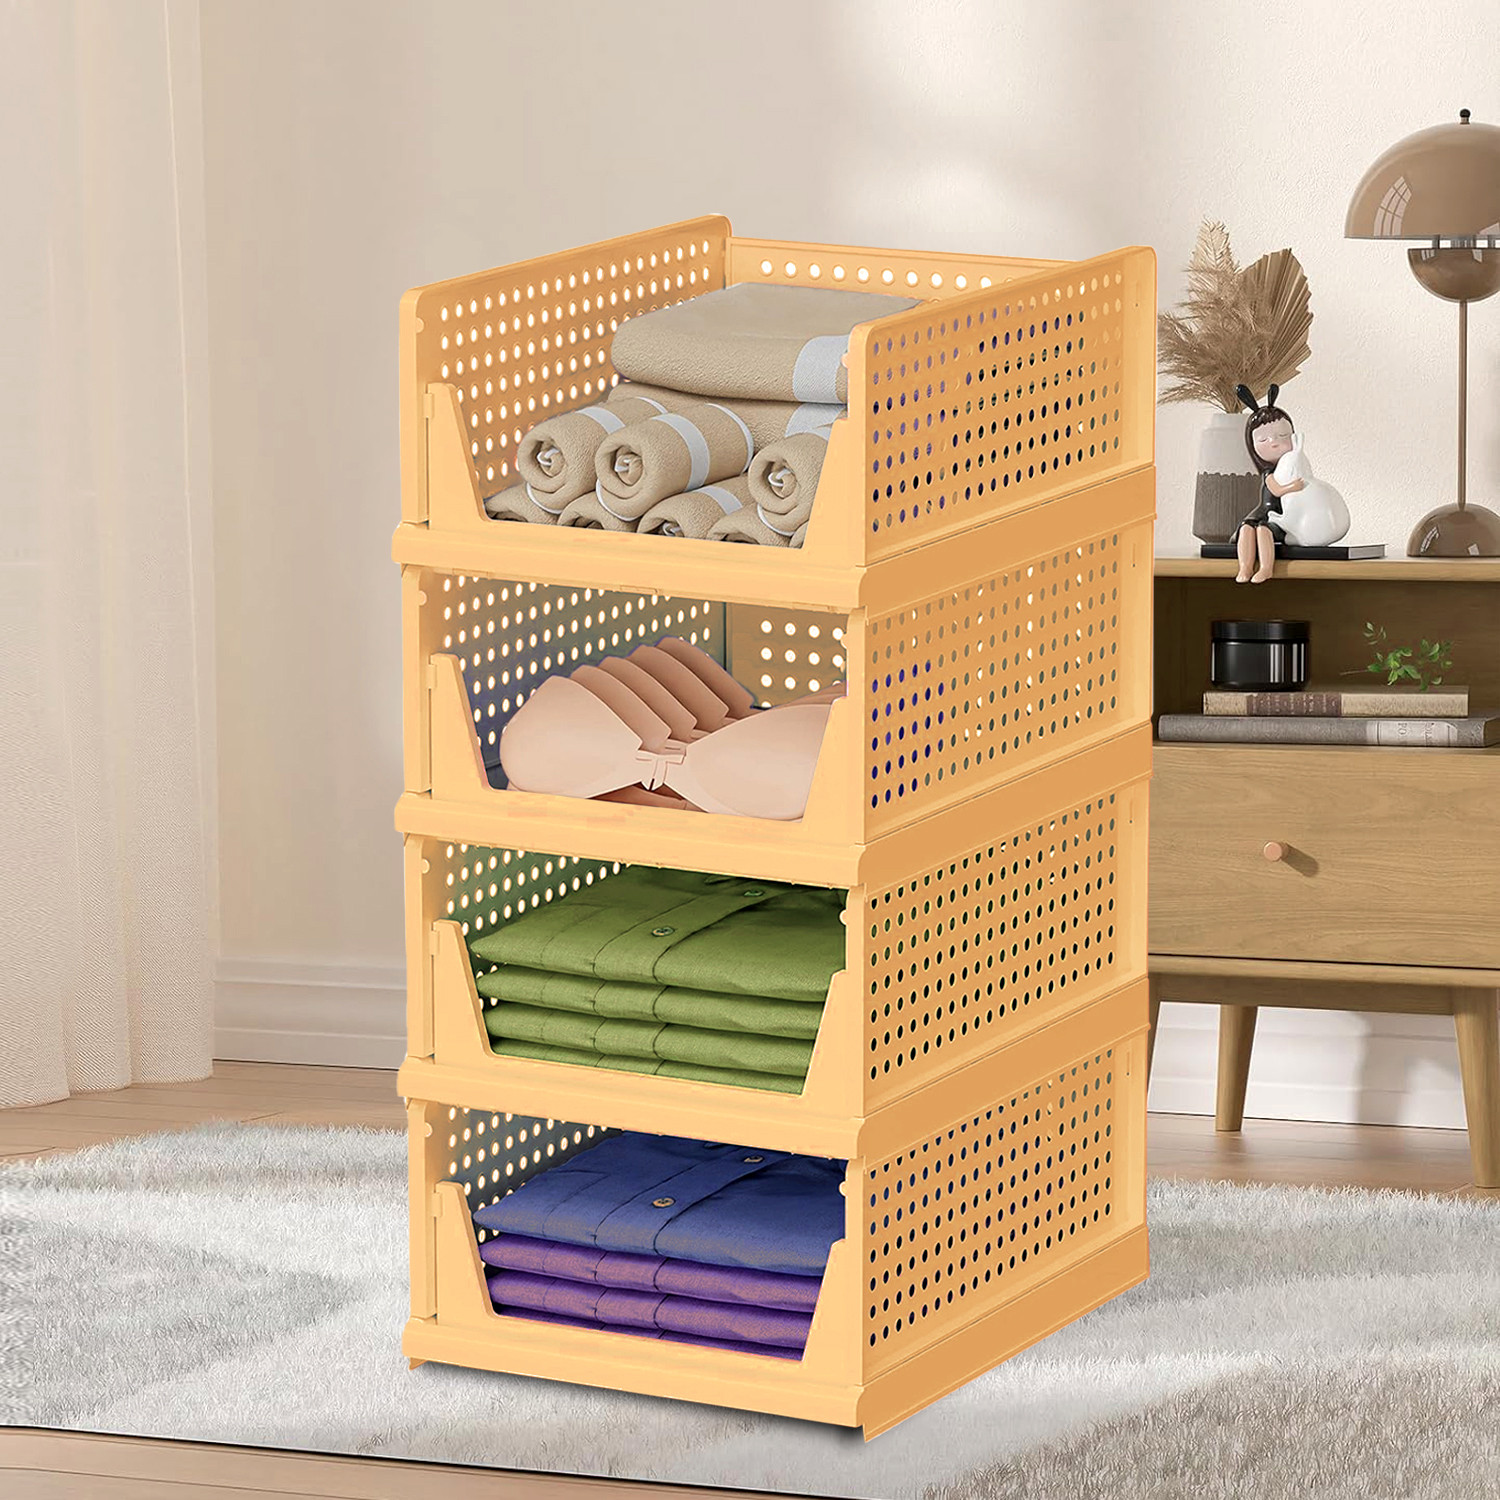 Kuber Industries Storage Organizer | Wardrobe Organizer For Clothes | Cloth Organizer | Foldable Shirt Stacker Box | Cloth Box for Almirah | Closet Storage Basket | Large | Ivory